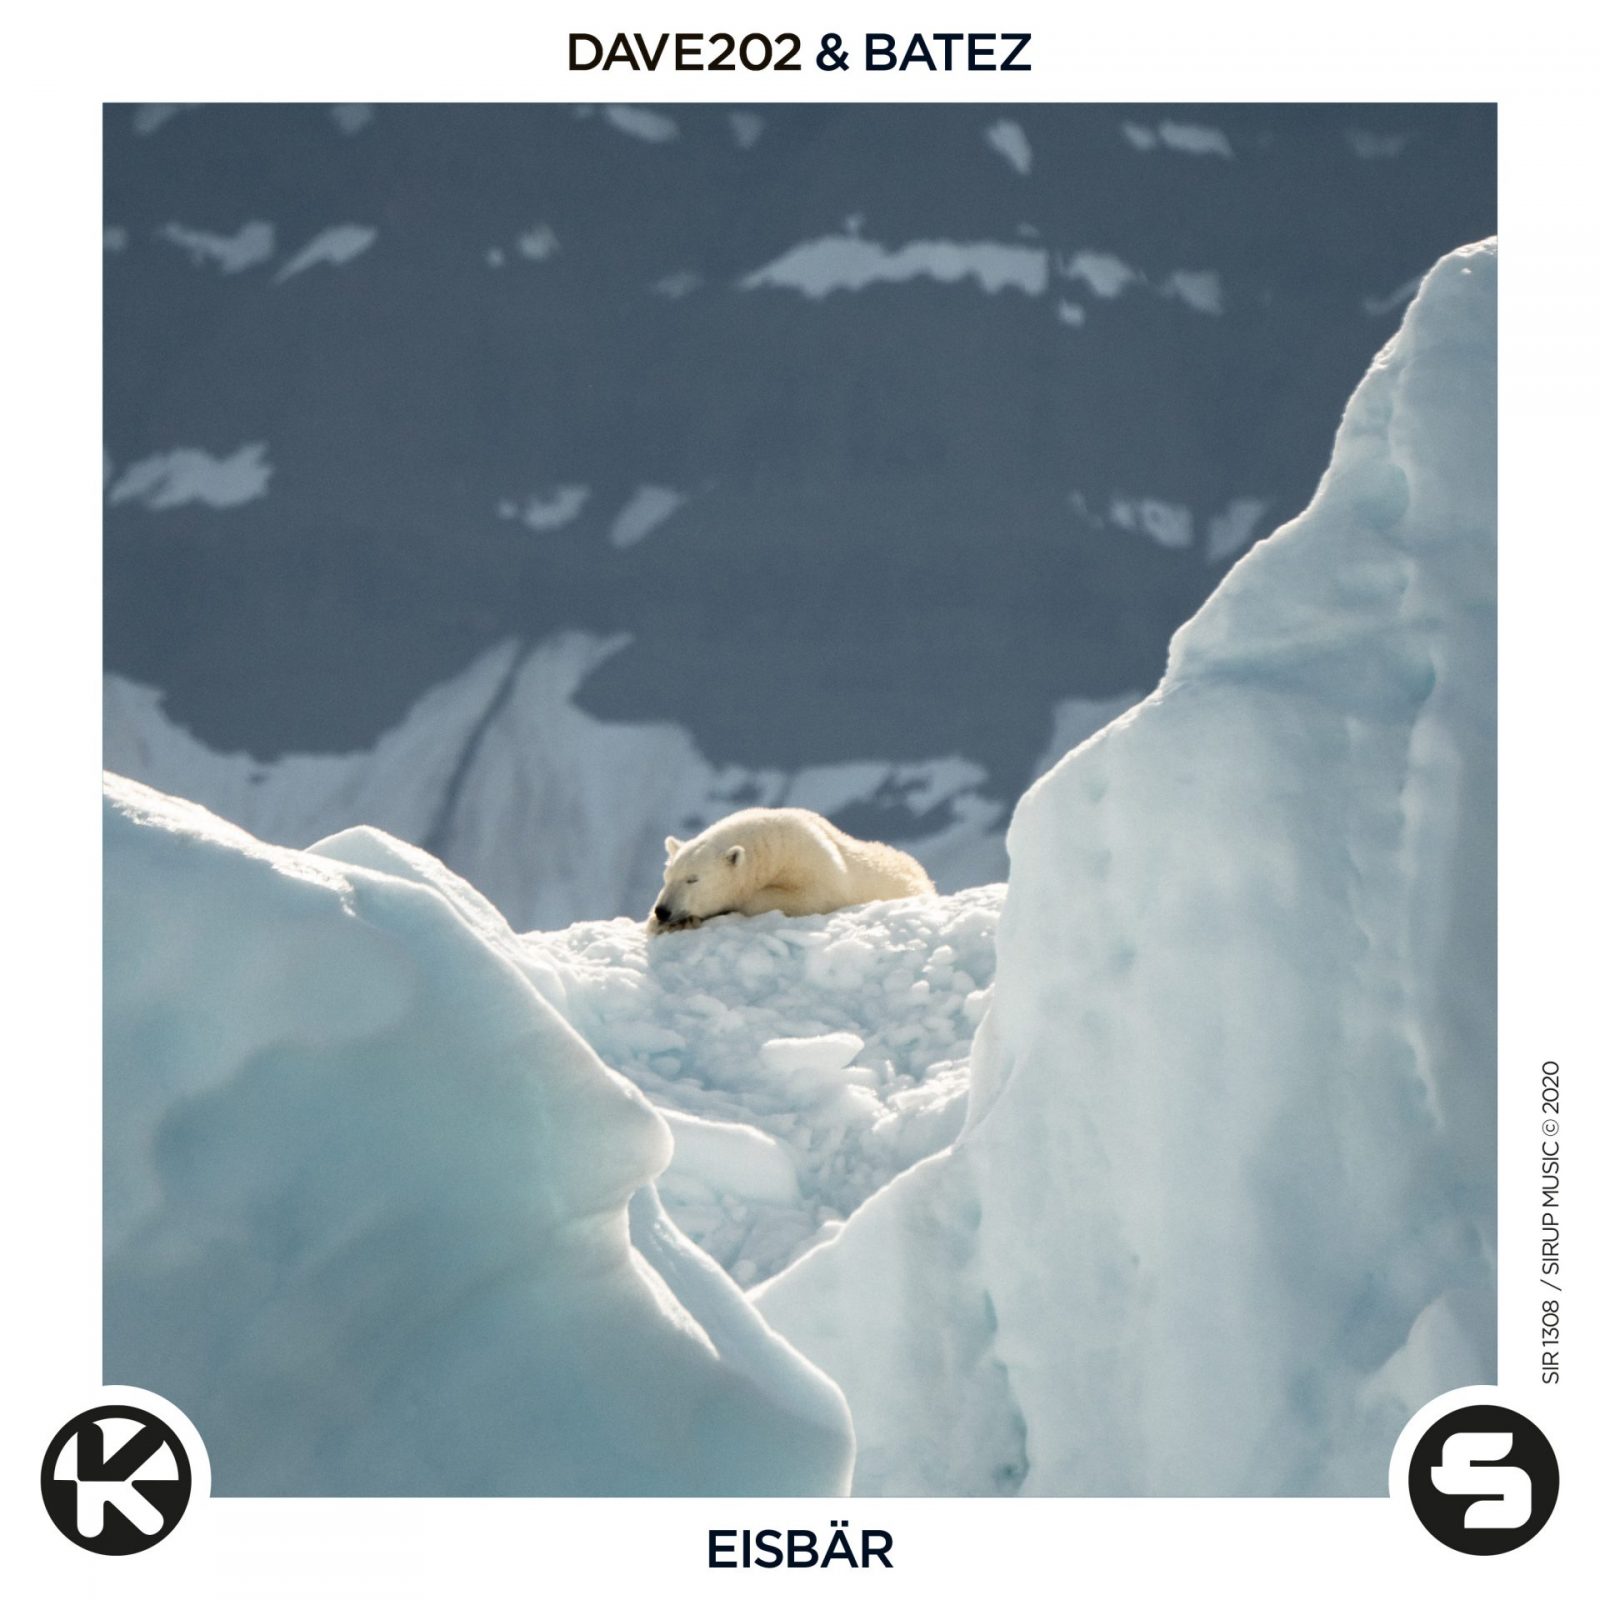 DAVE202 & BATEZ Eisbär